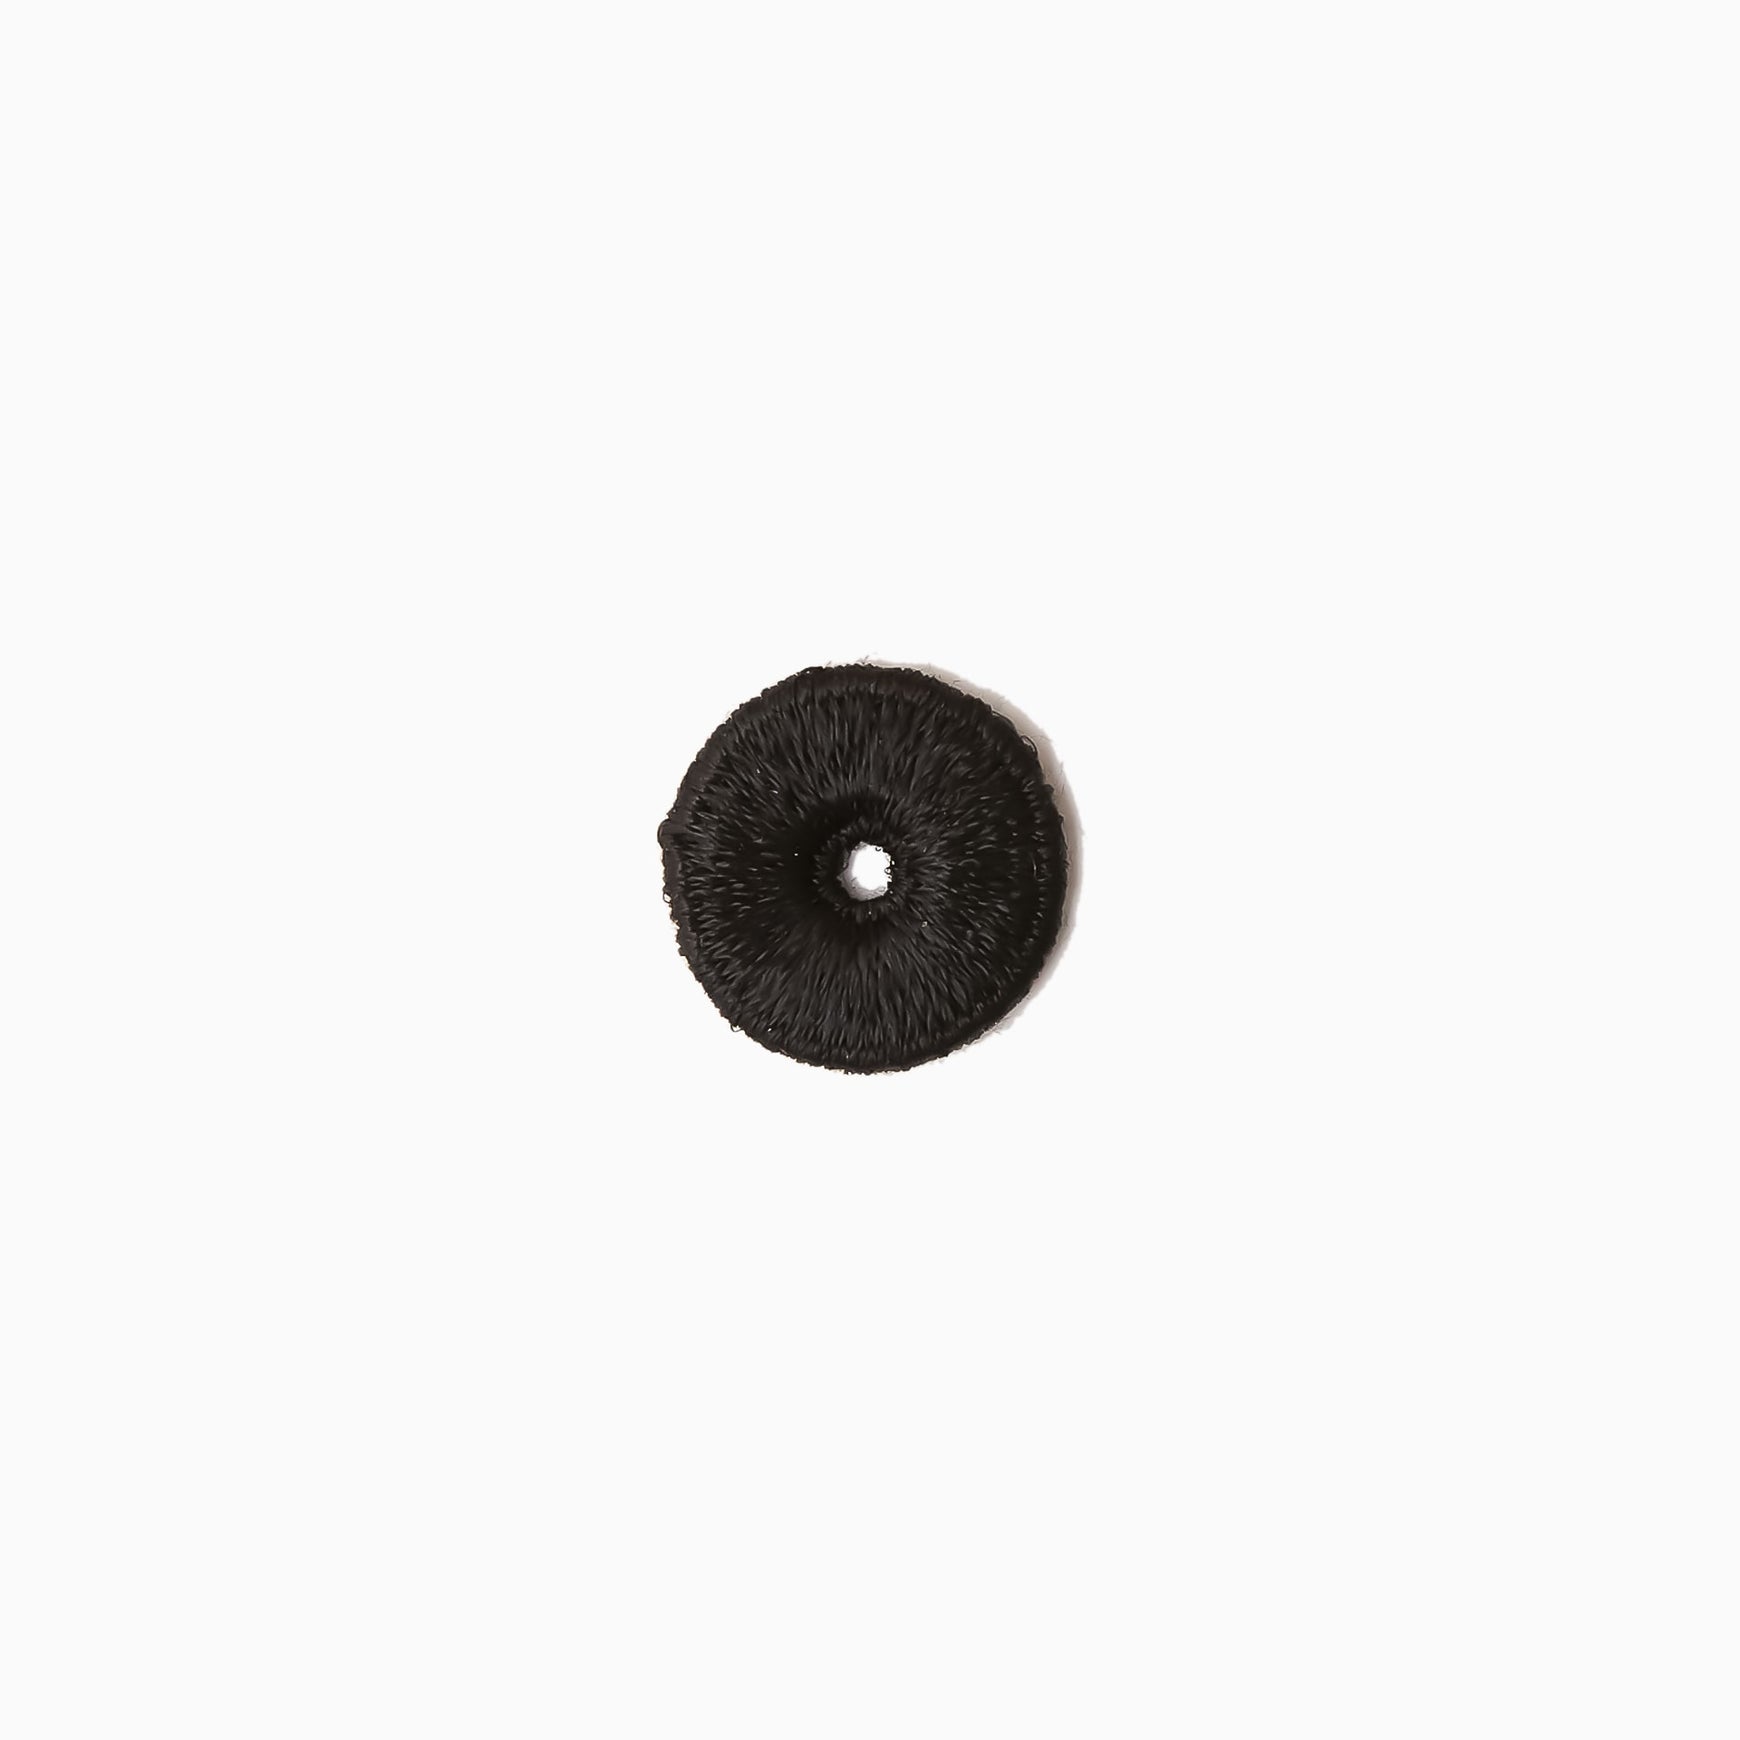 TYPE-1 Circle Washer 10 Pieces (Black)